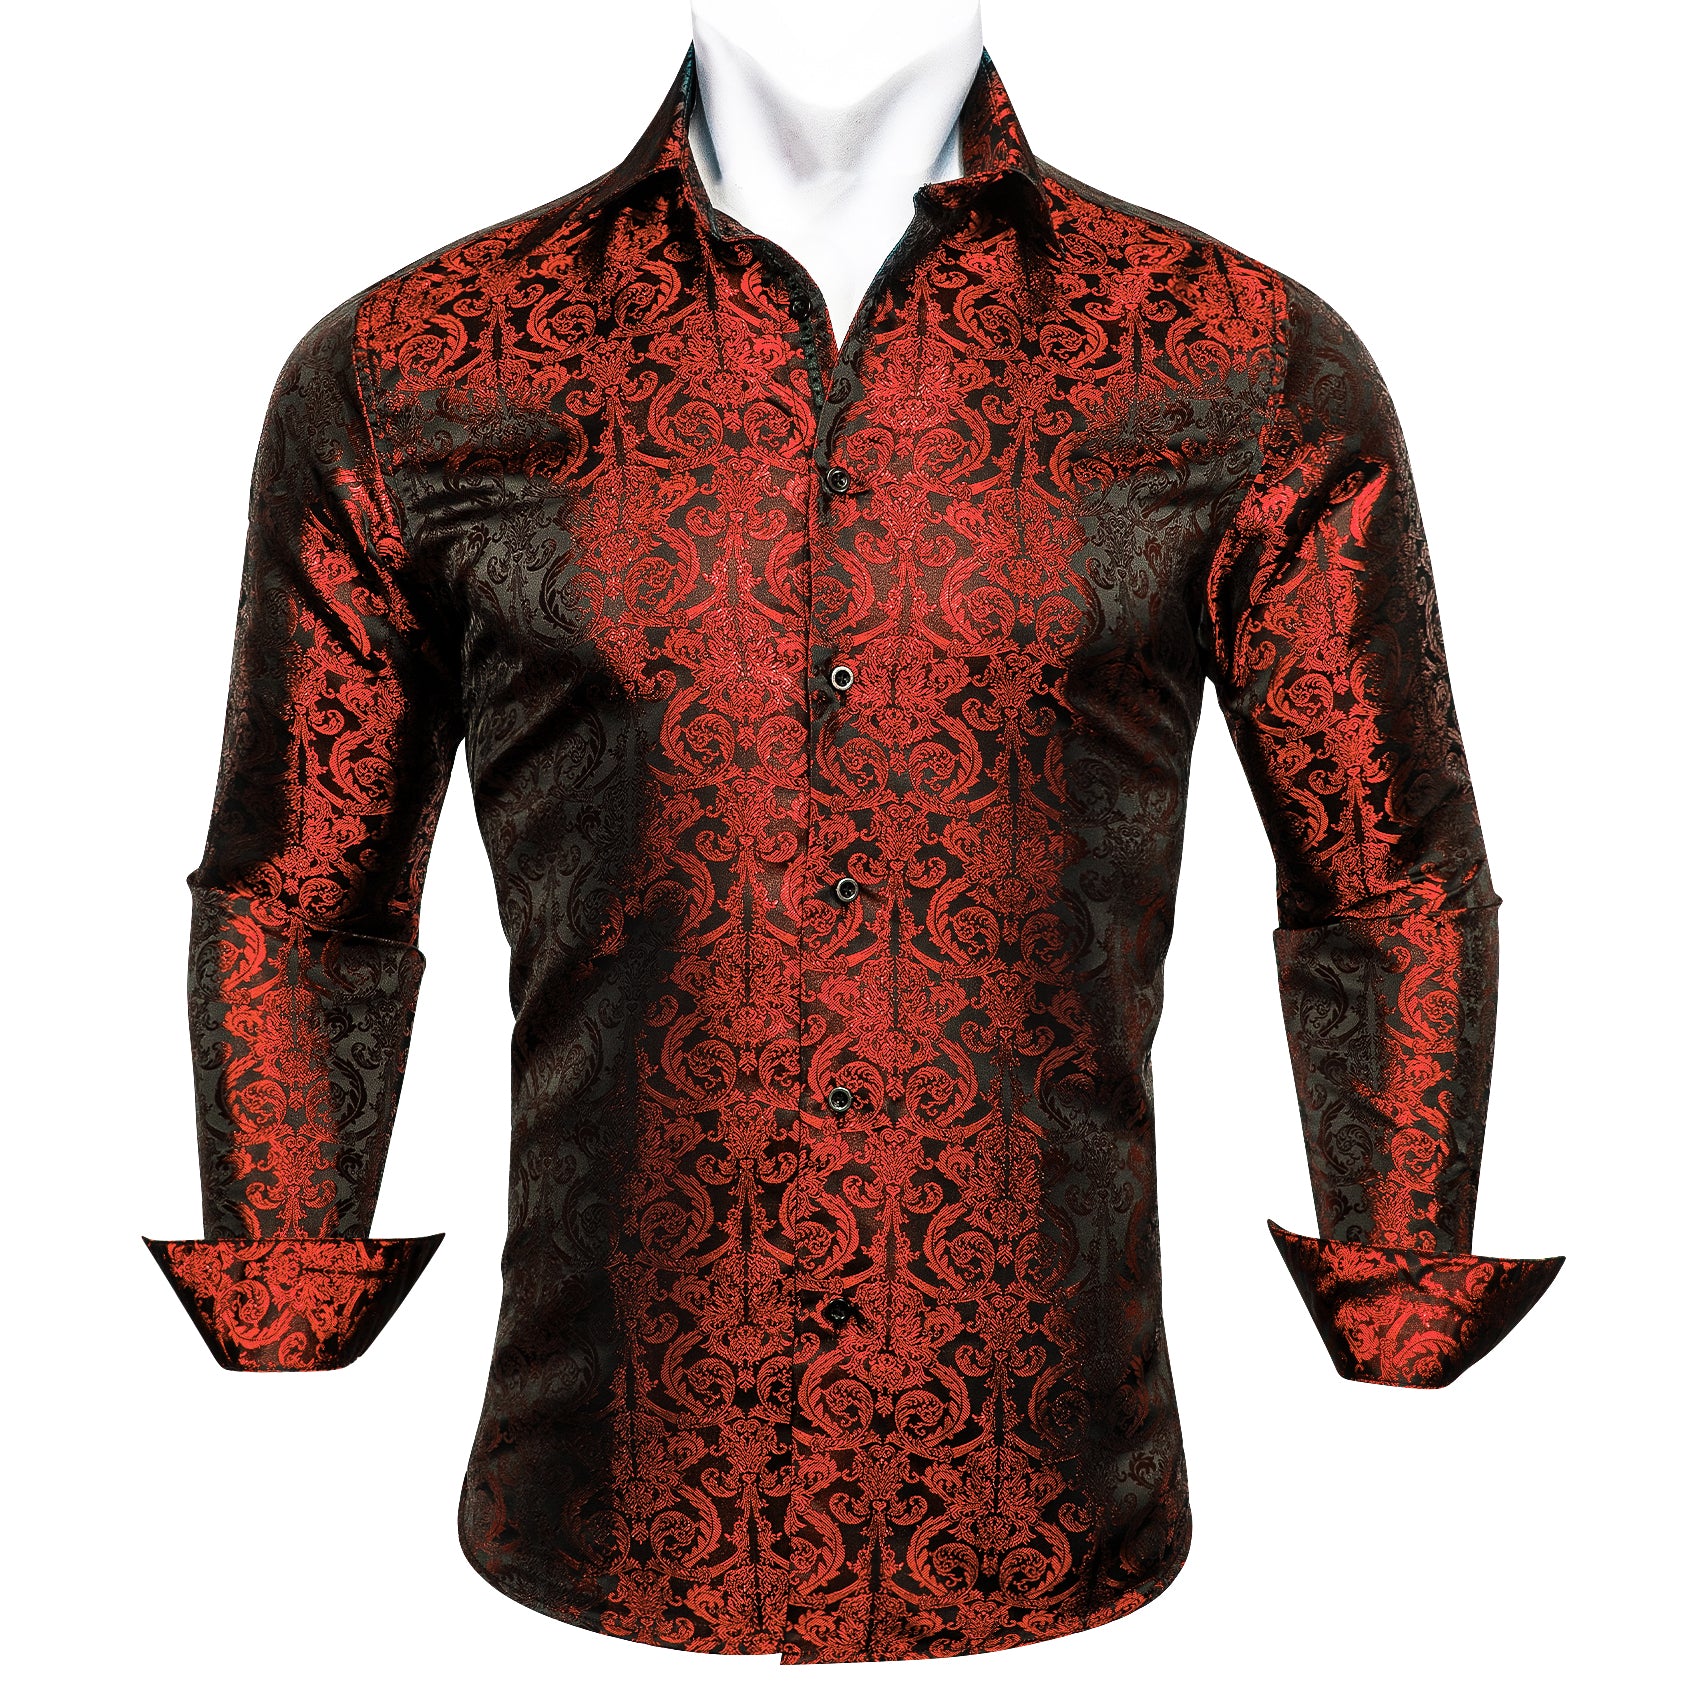 Barry.wang Button Down Shirt Burgundy Black Paisley Silk Men's Shirt